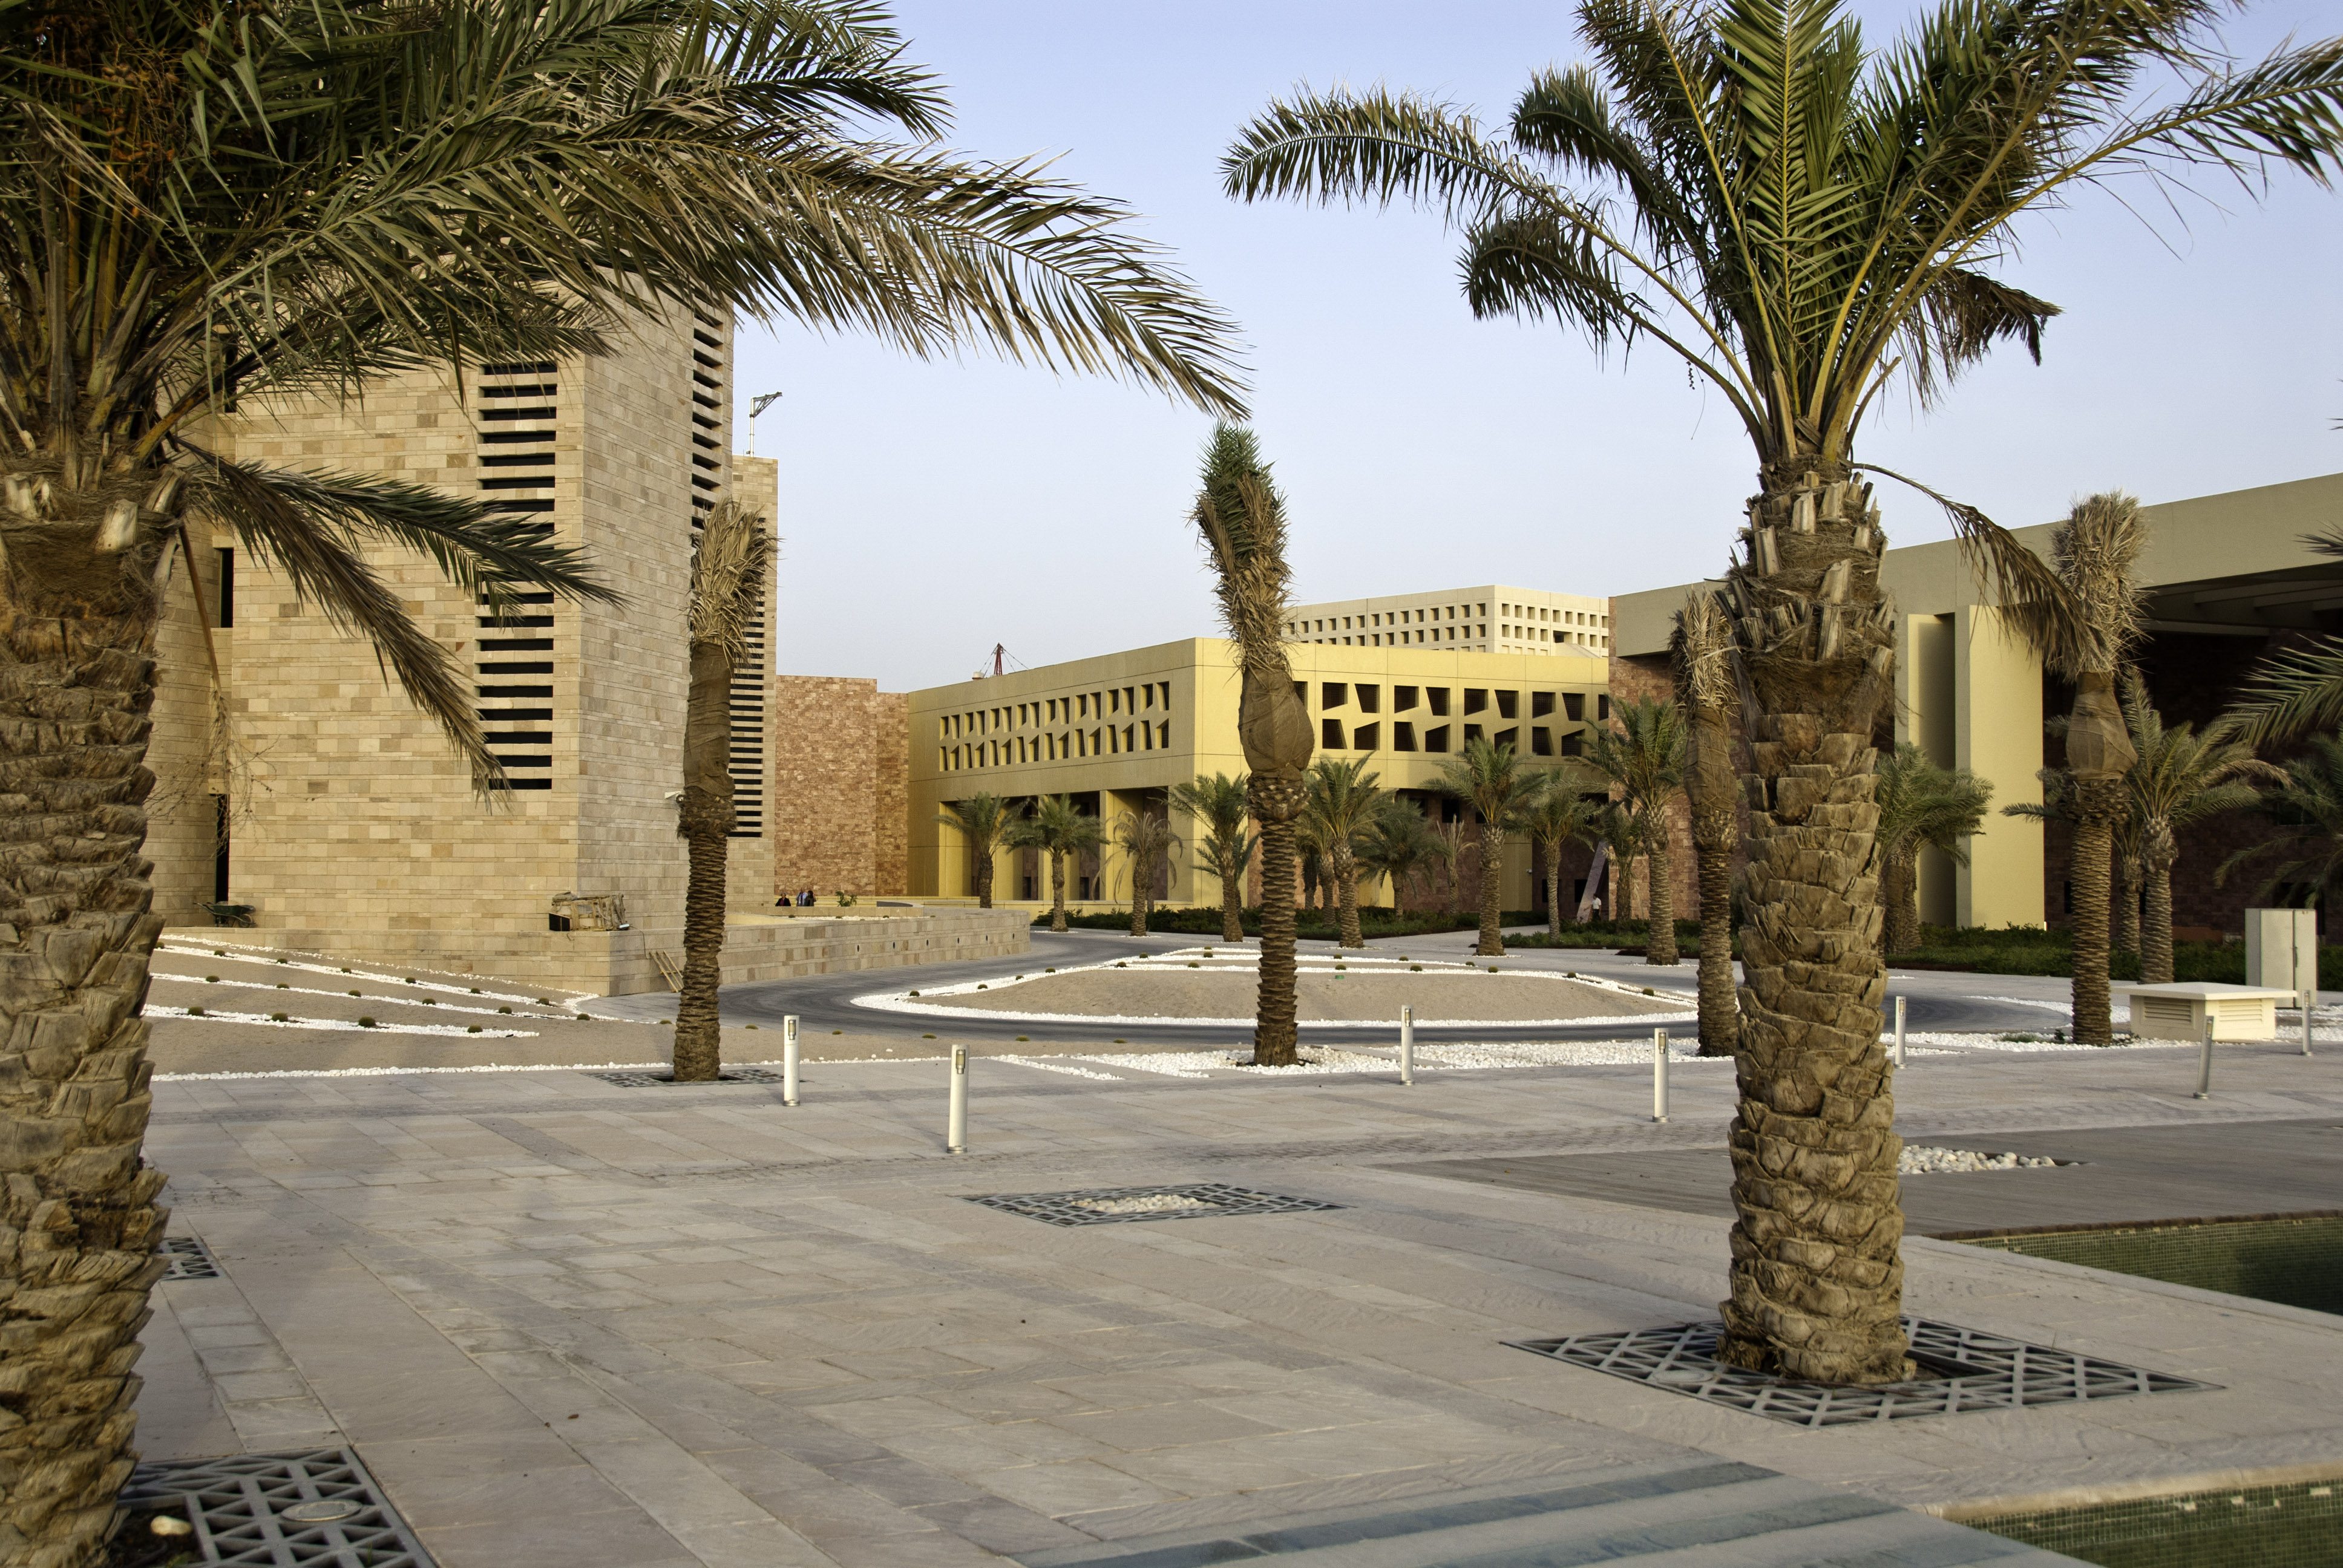 Desert city and landscape in Doha, Qatar image - Free stock photo